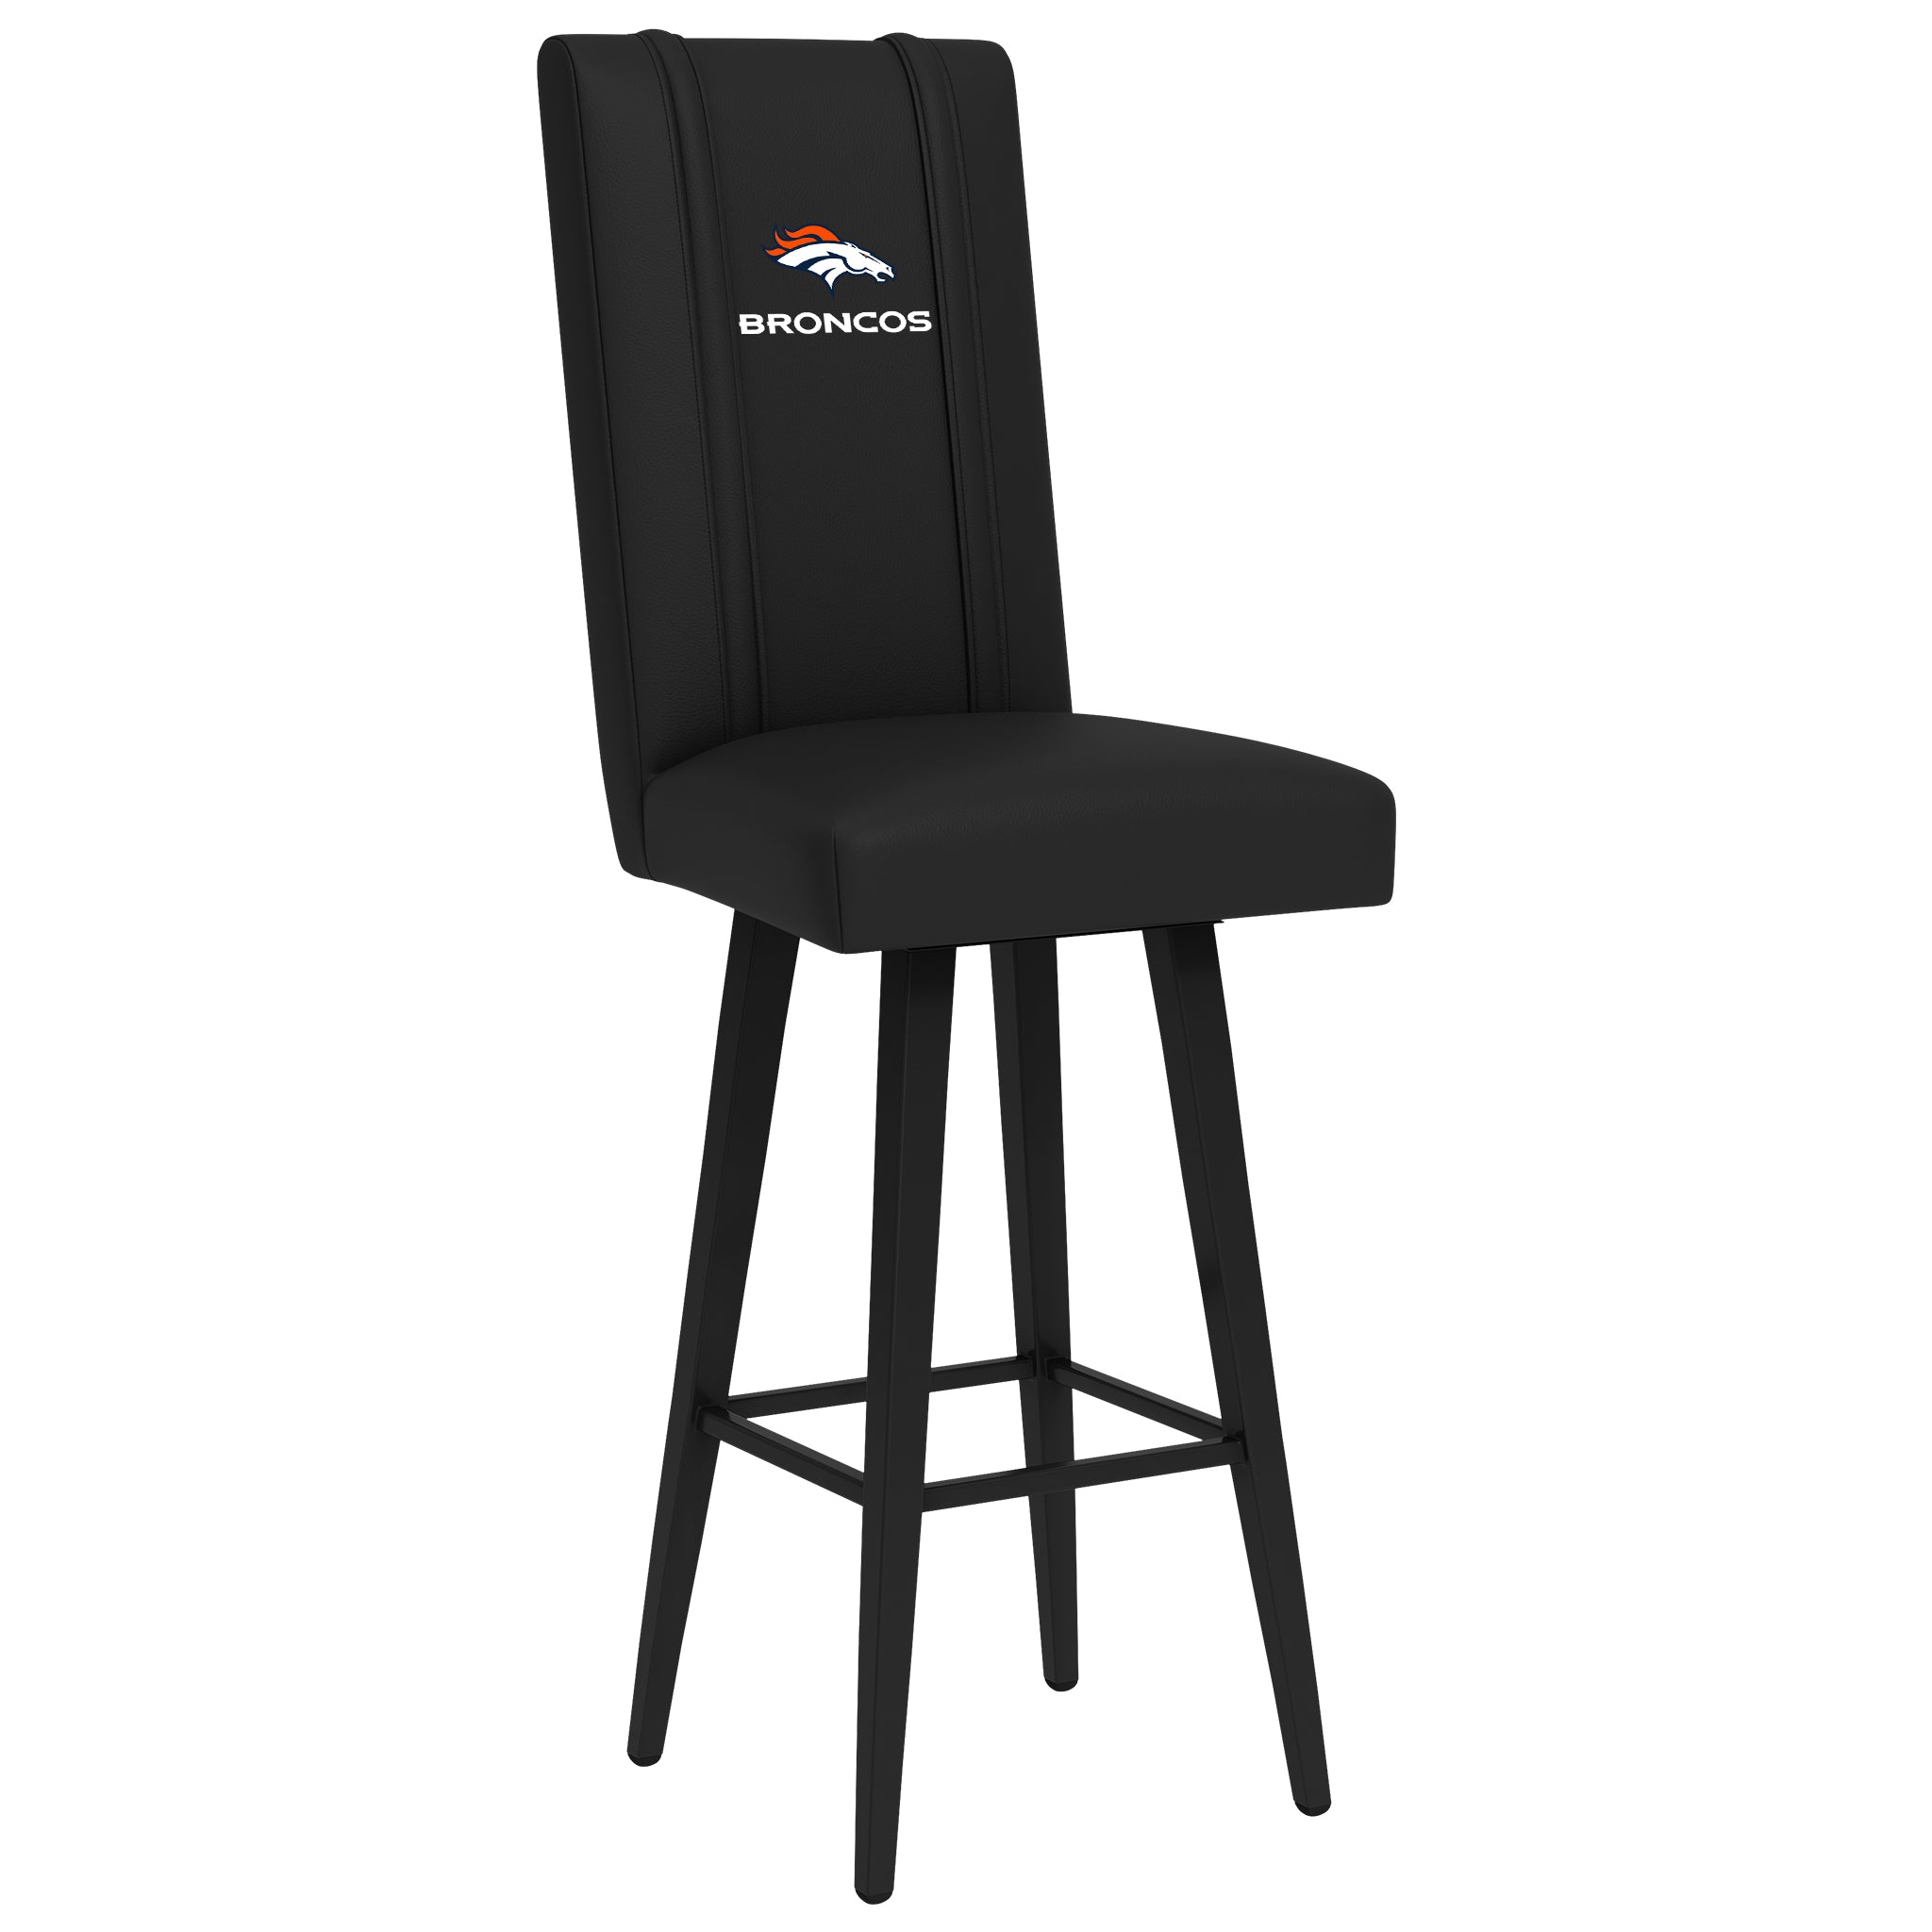 Denver Broncos Swivel Bar Stool - Chair - Furniture - Kitchen